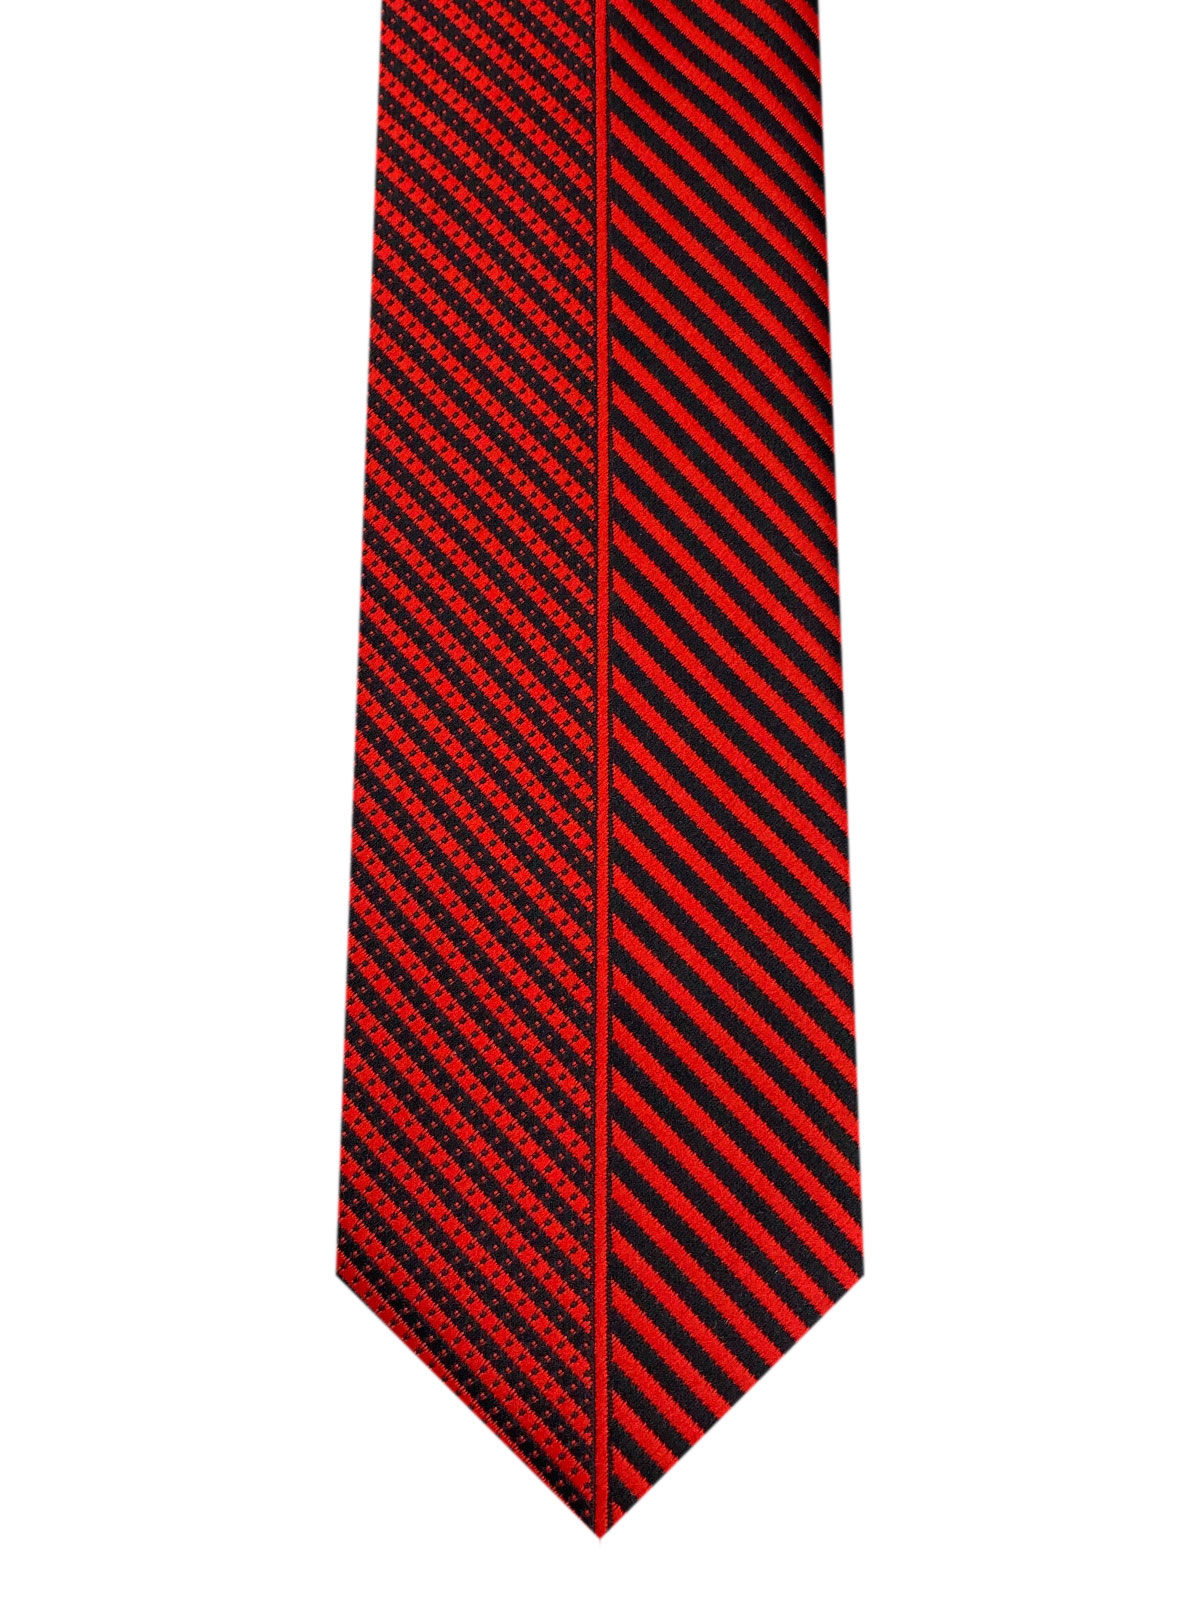 Cravată cu dungi roșu aprins - 10206 - € 14.06 img2